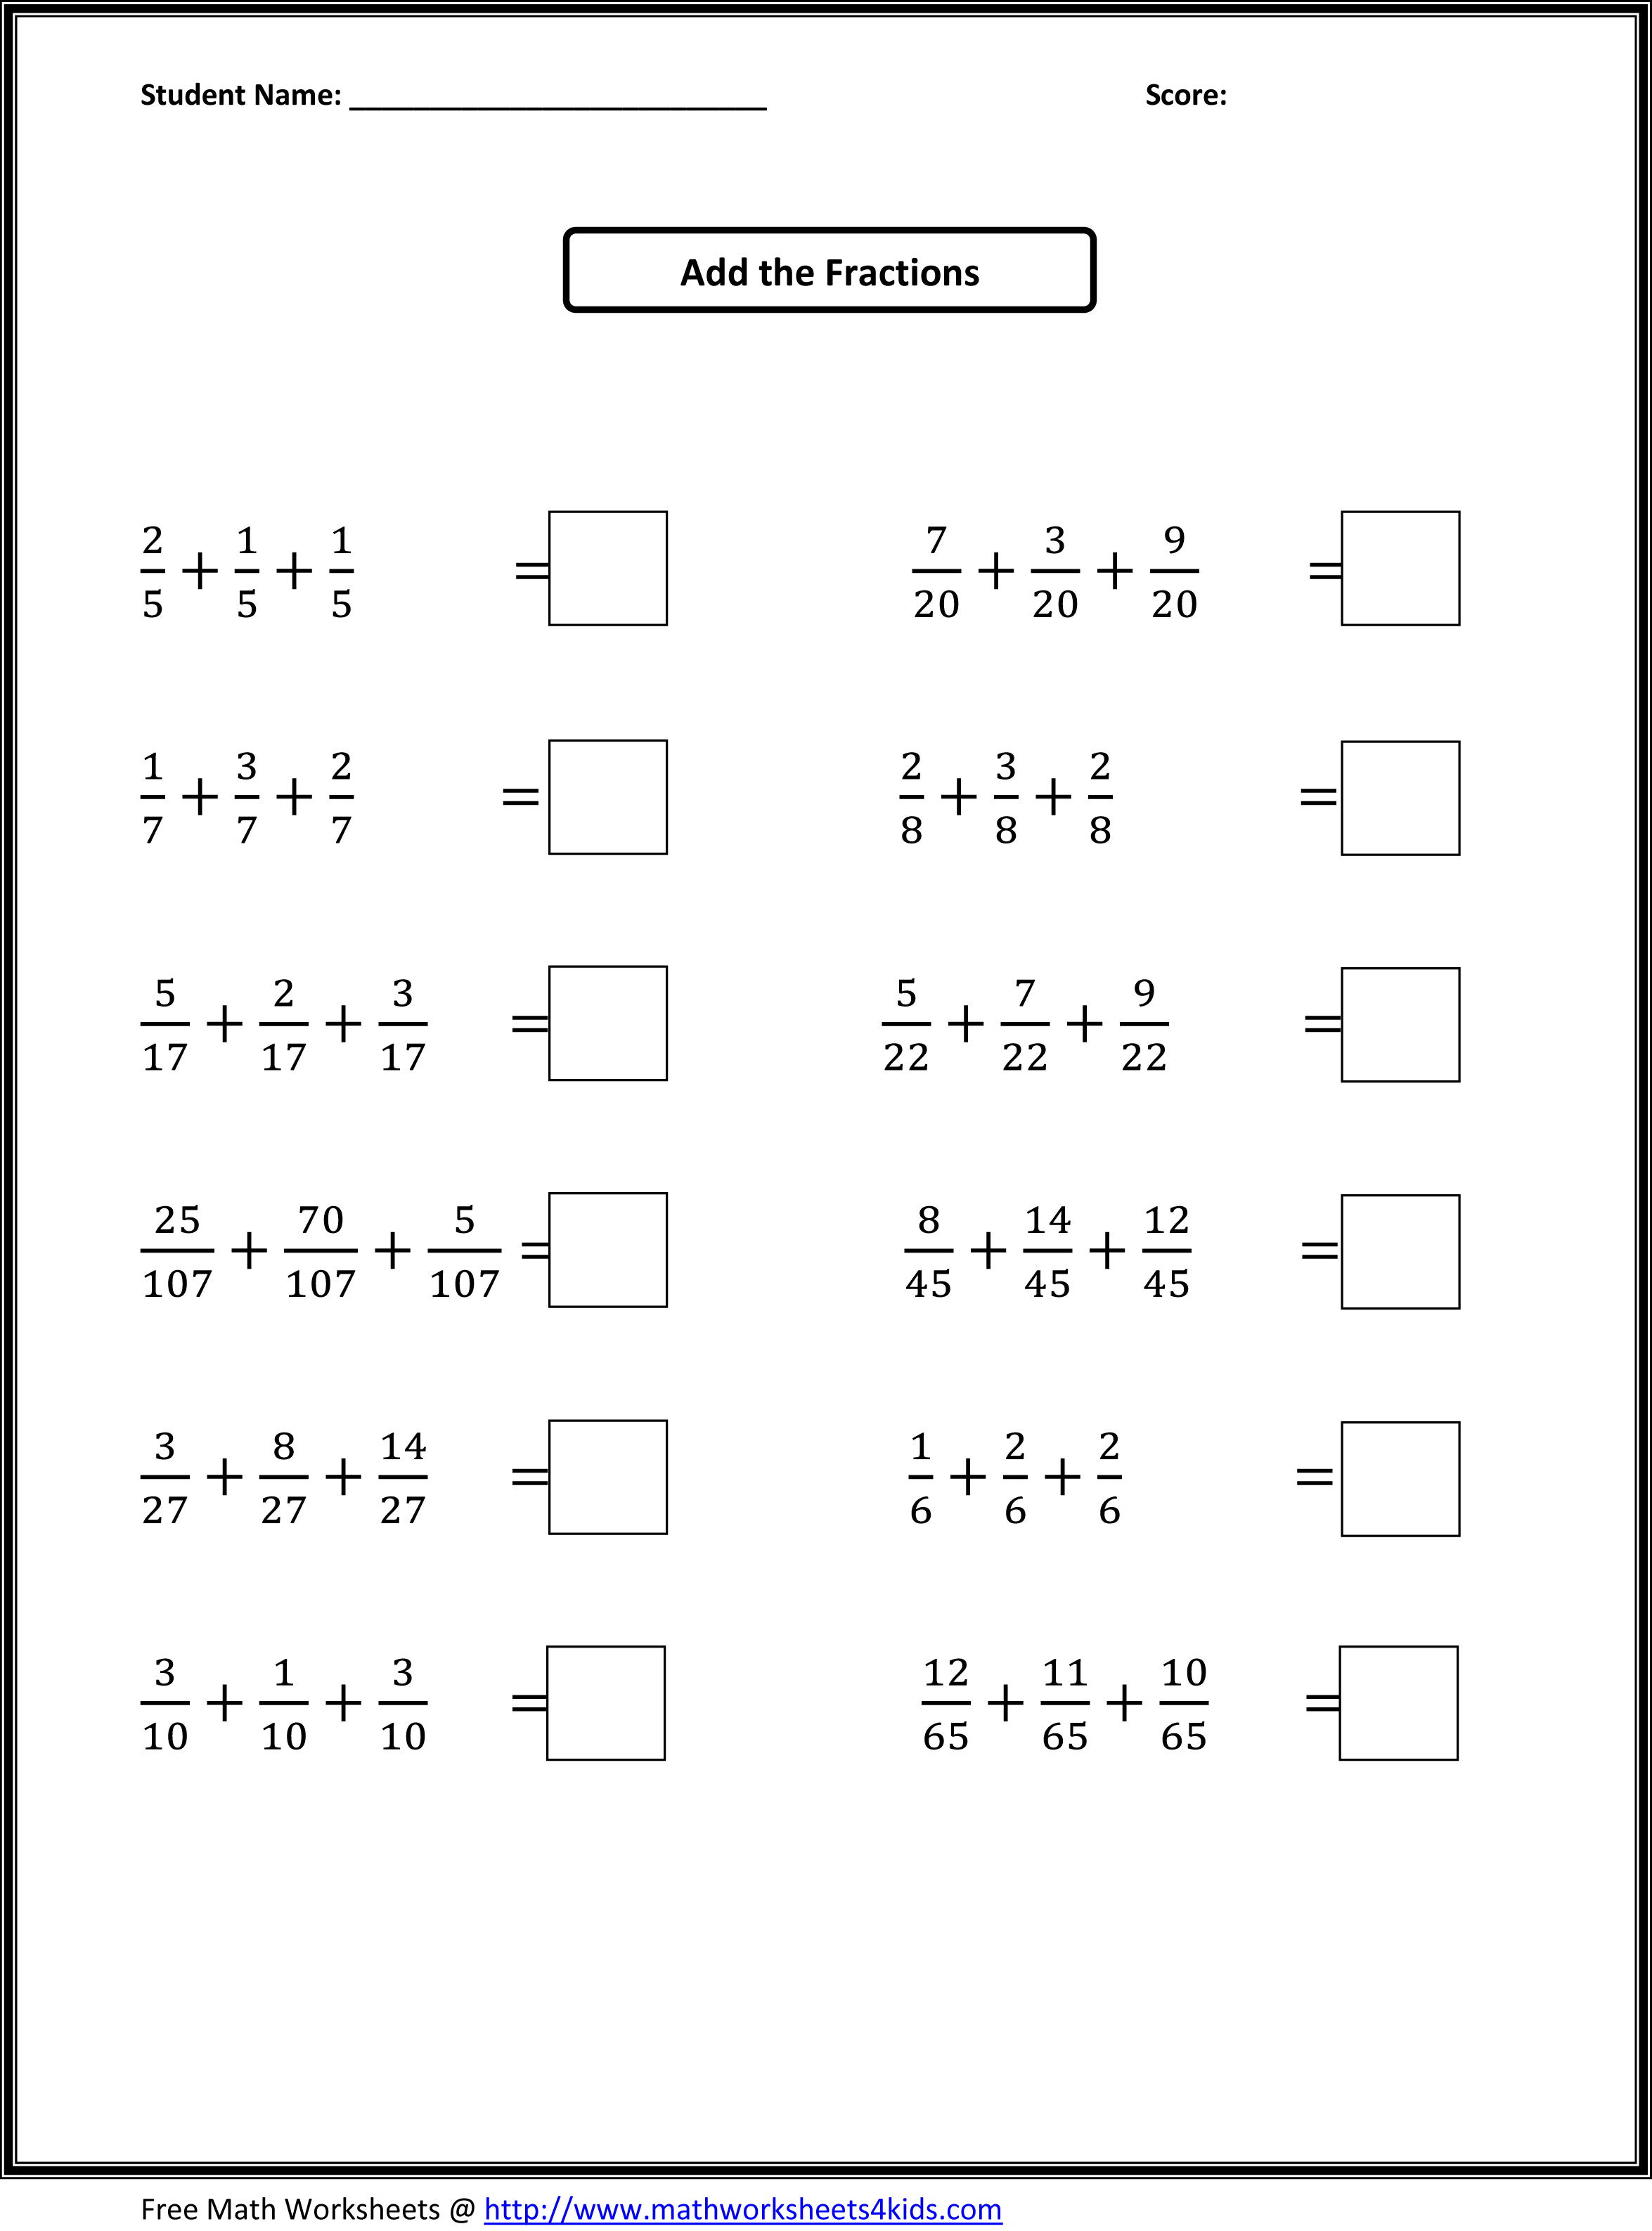 4th Grade Math Worksheets Fractions Image